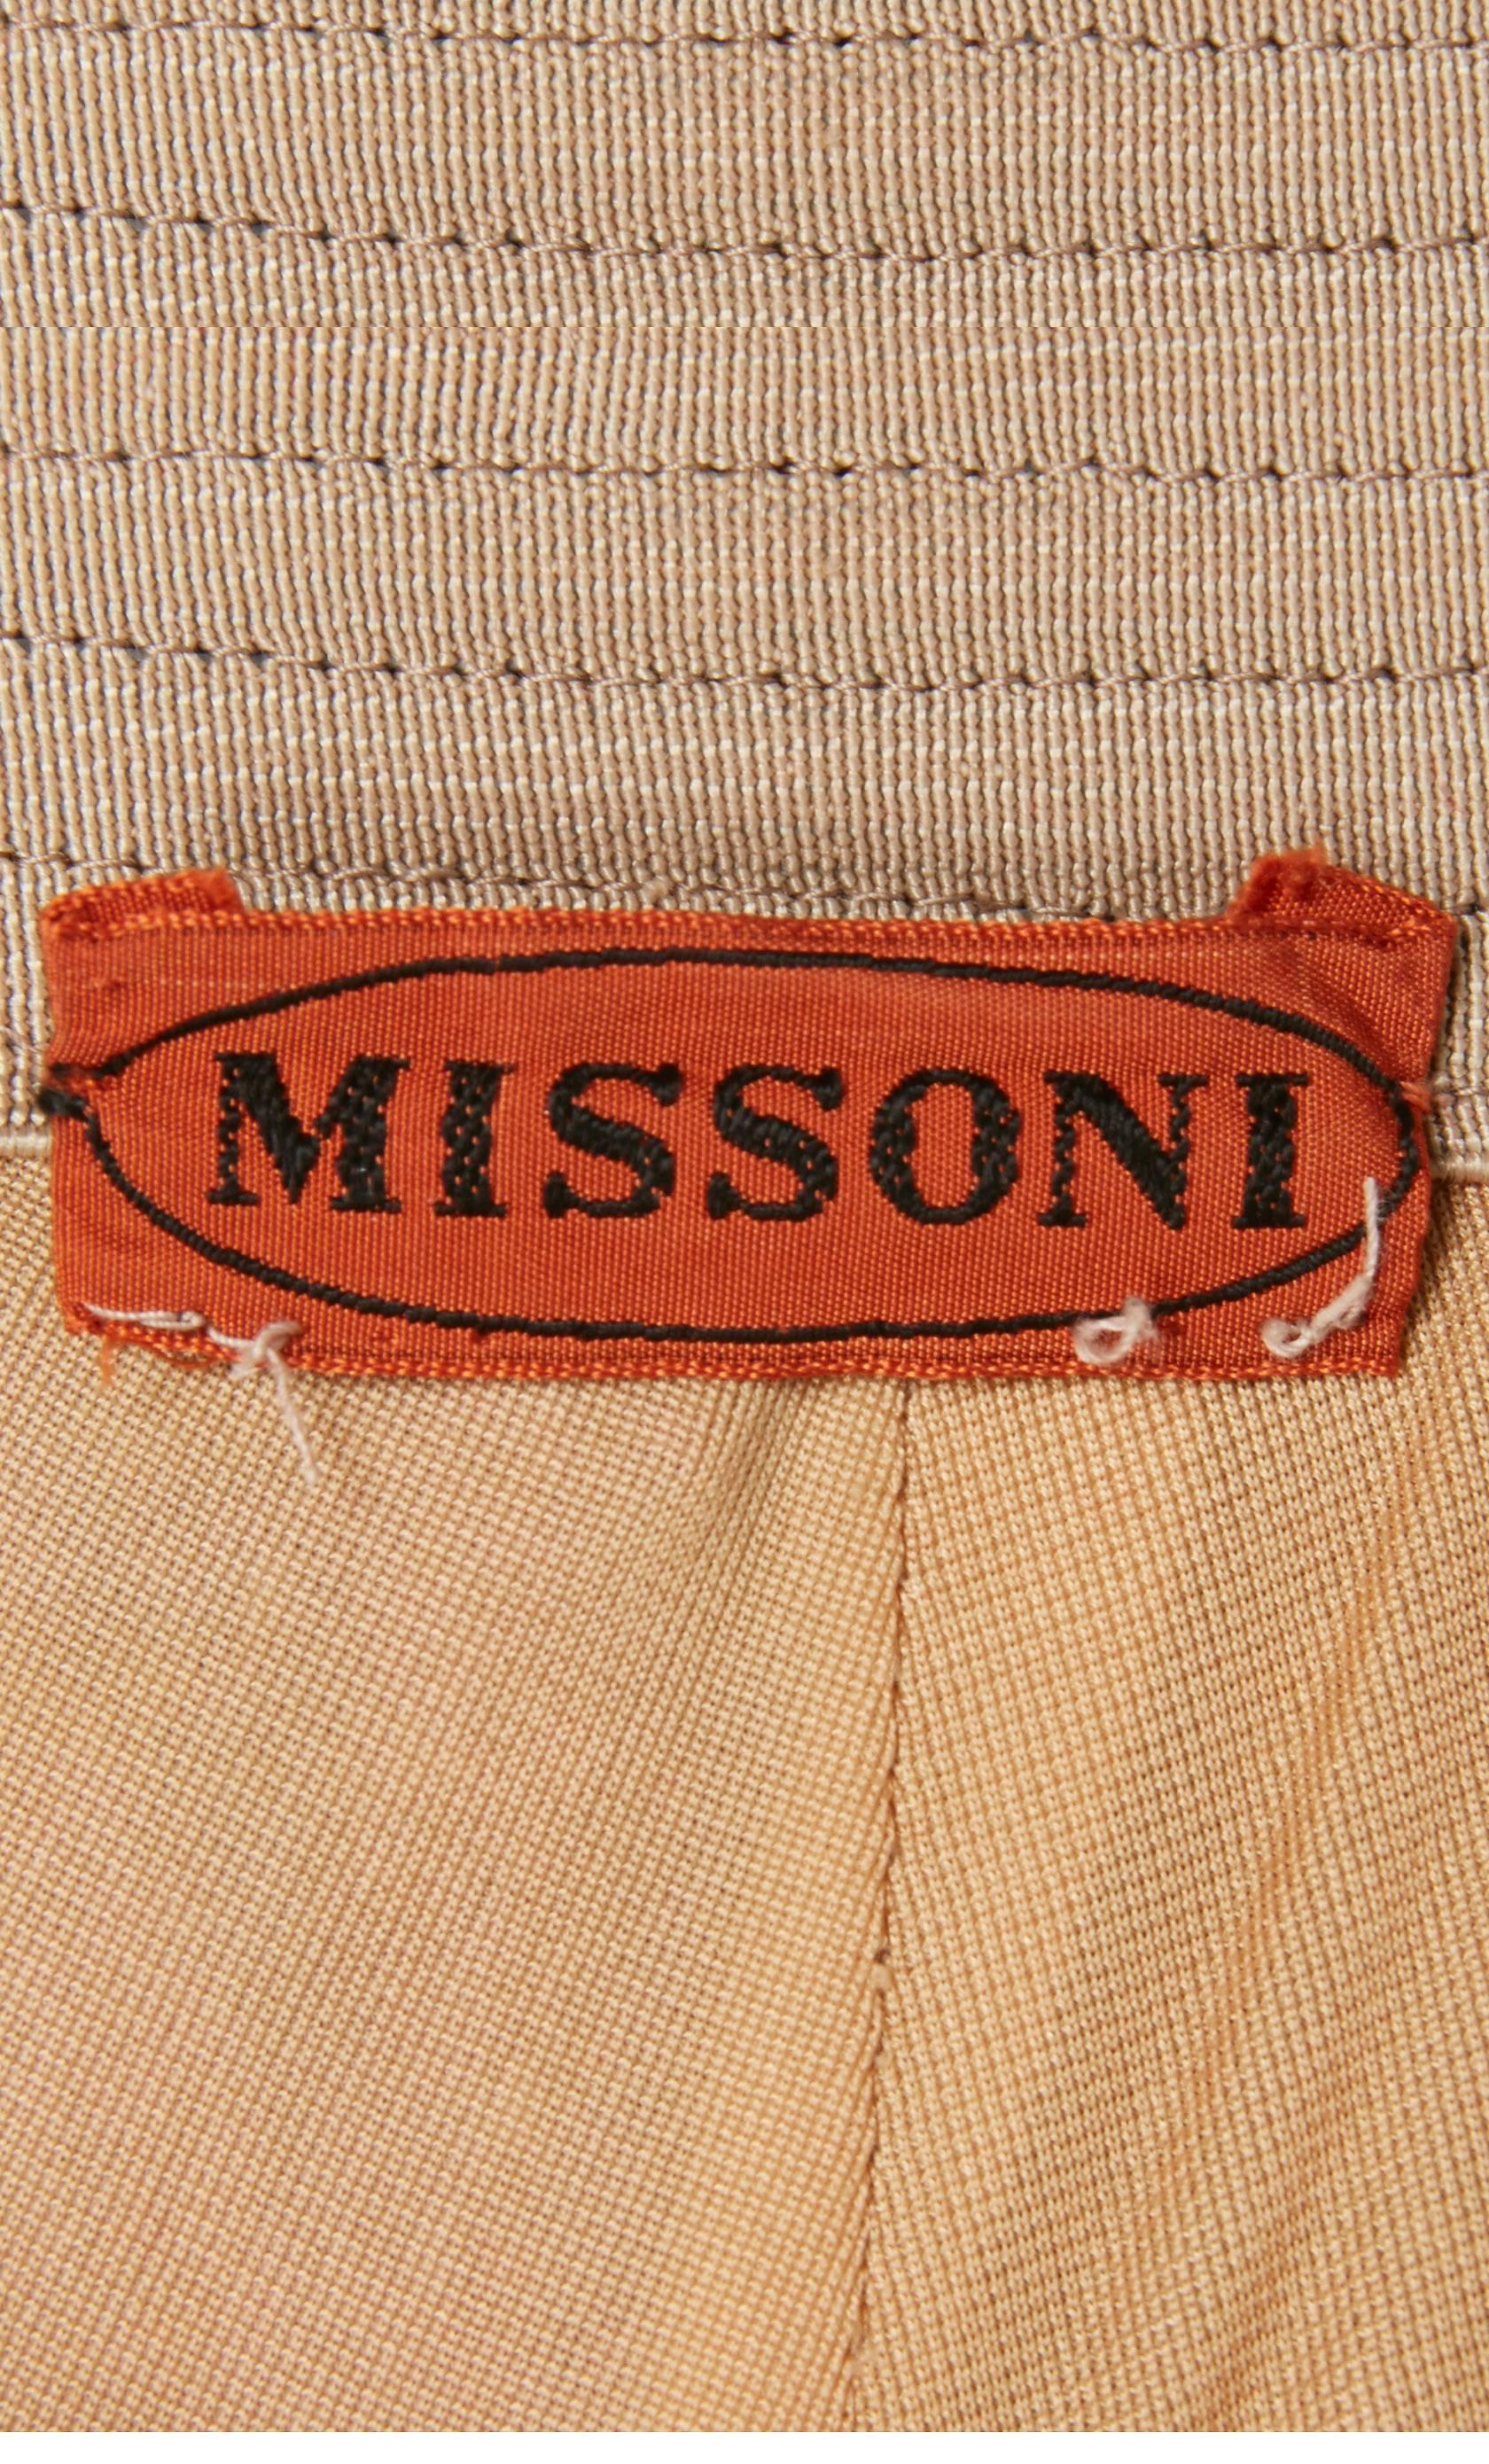 Women's Missoni multicoloured skirt, circa 1975 For Sale